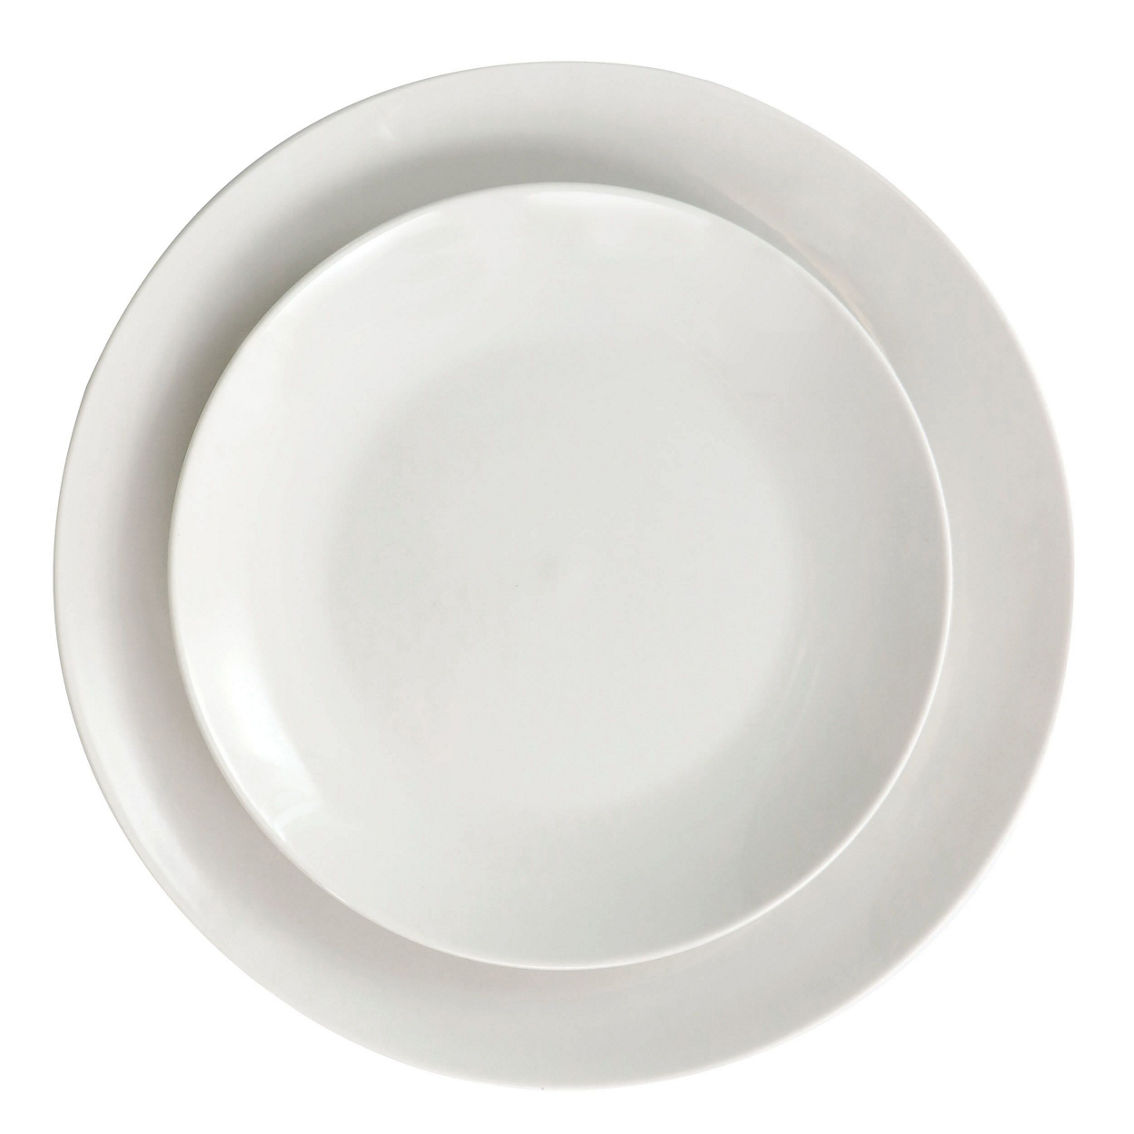 Elama Camellia 16 Piece Porcelain Double Bowl Dinnerware Set - Image 4 of 5